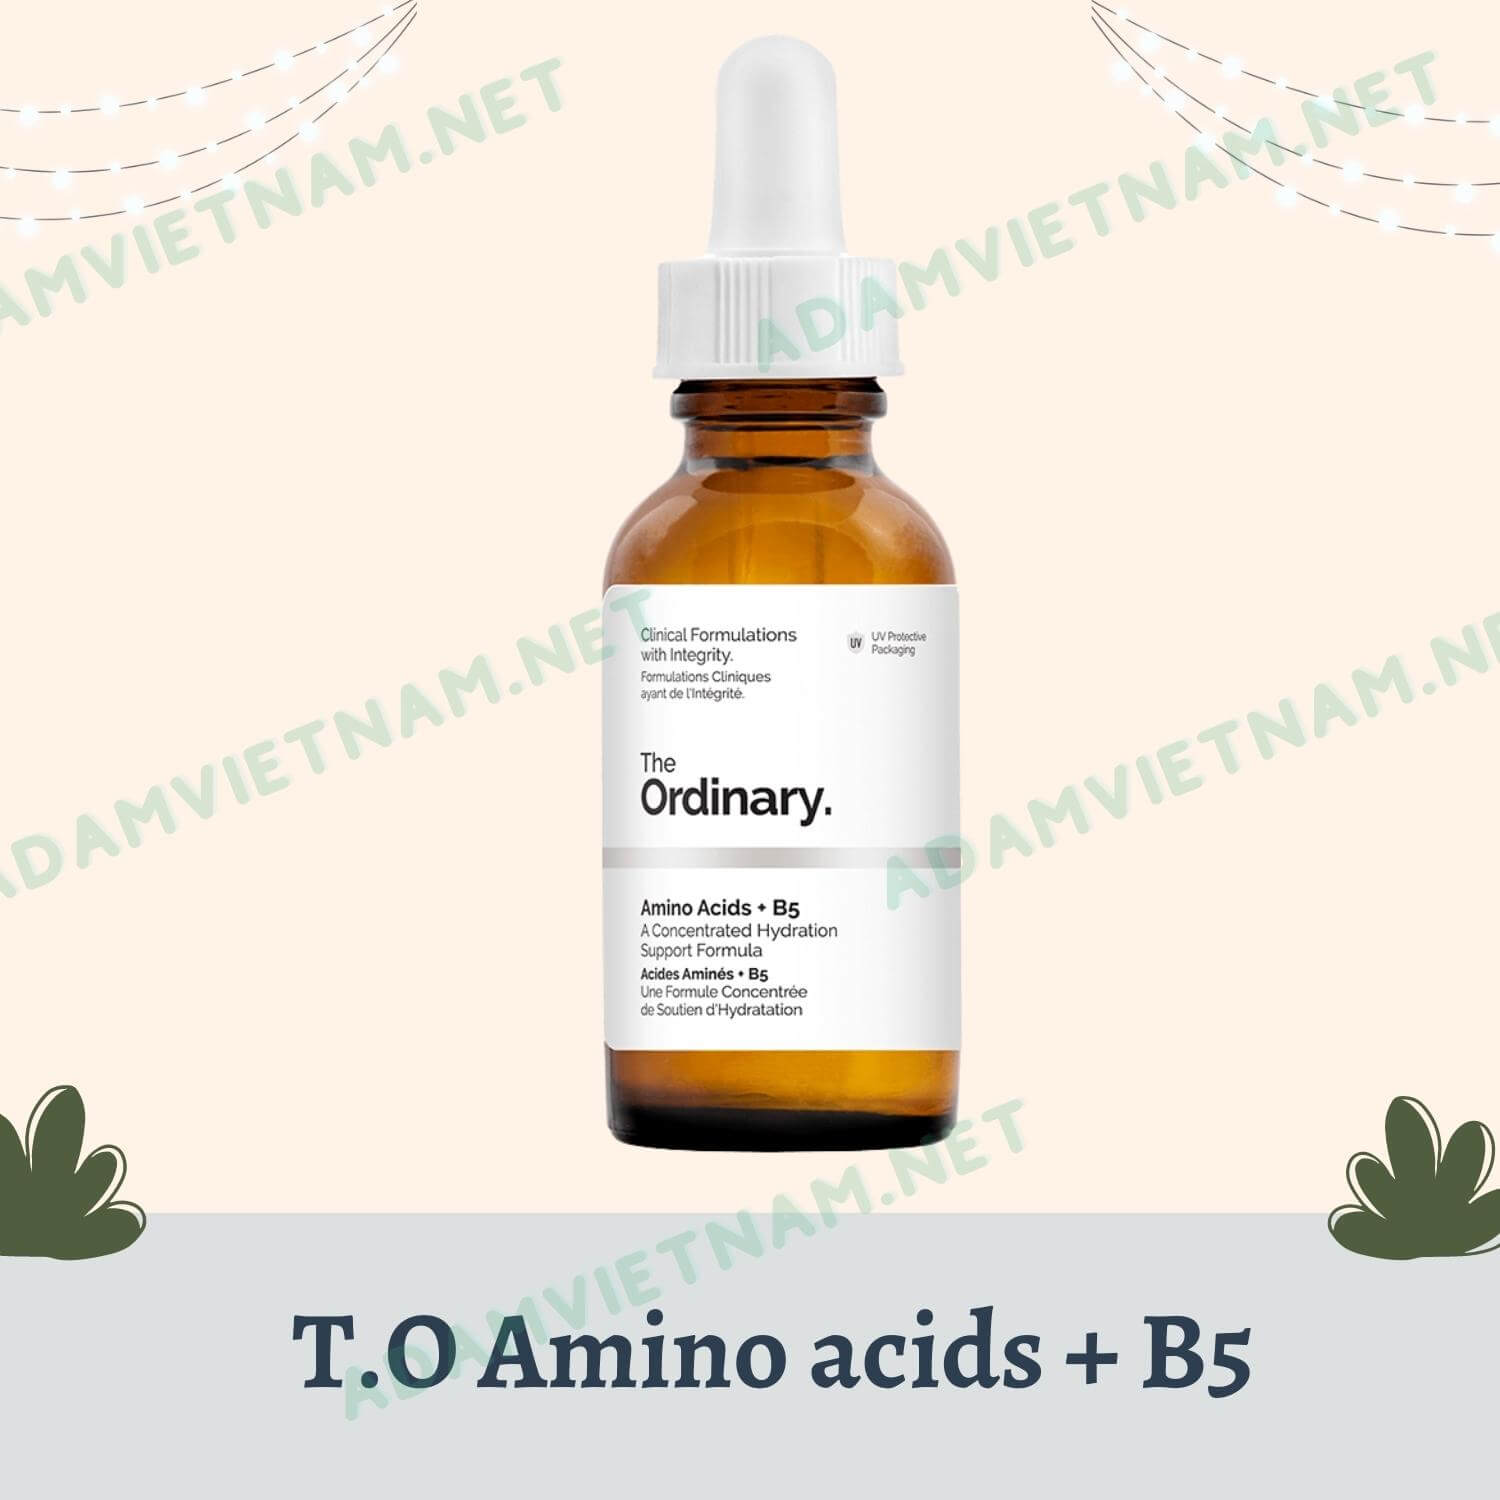 The Ordinary Amino acids + B5 serum